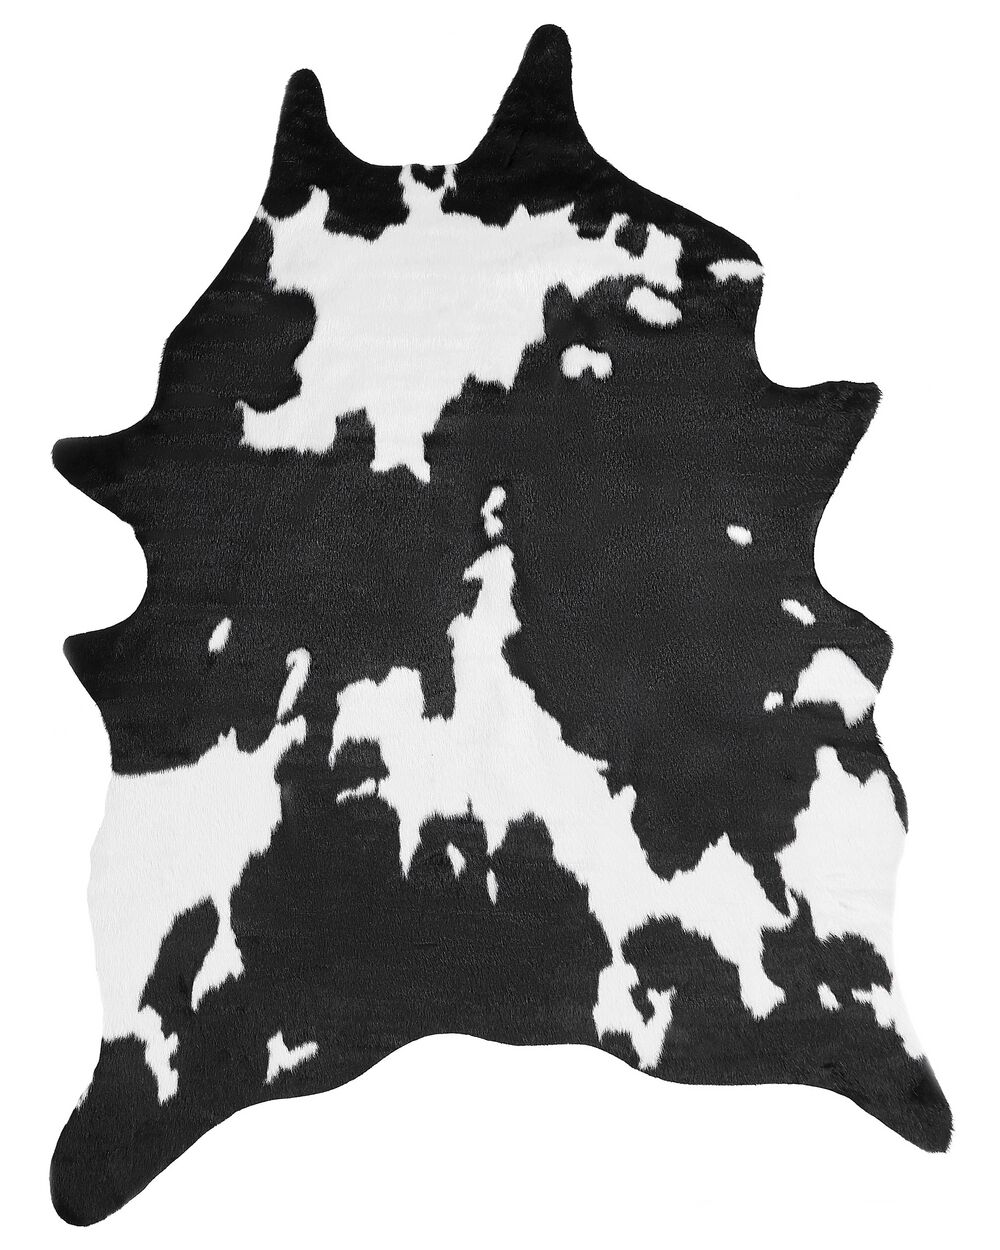 homara Kunstfell - schwarz-weiß - 55x80 cm 4044361072746